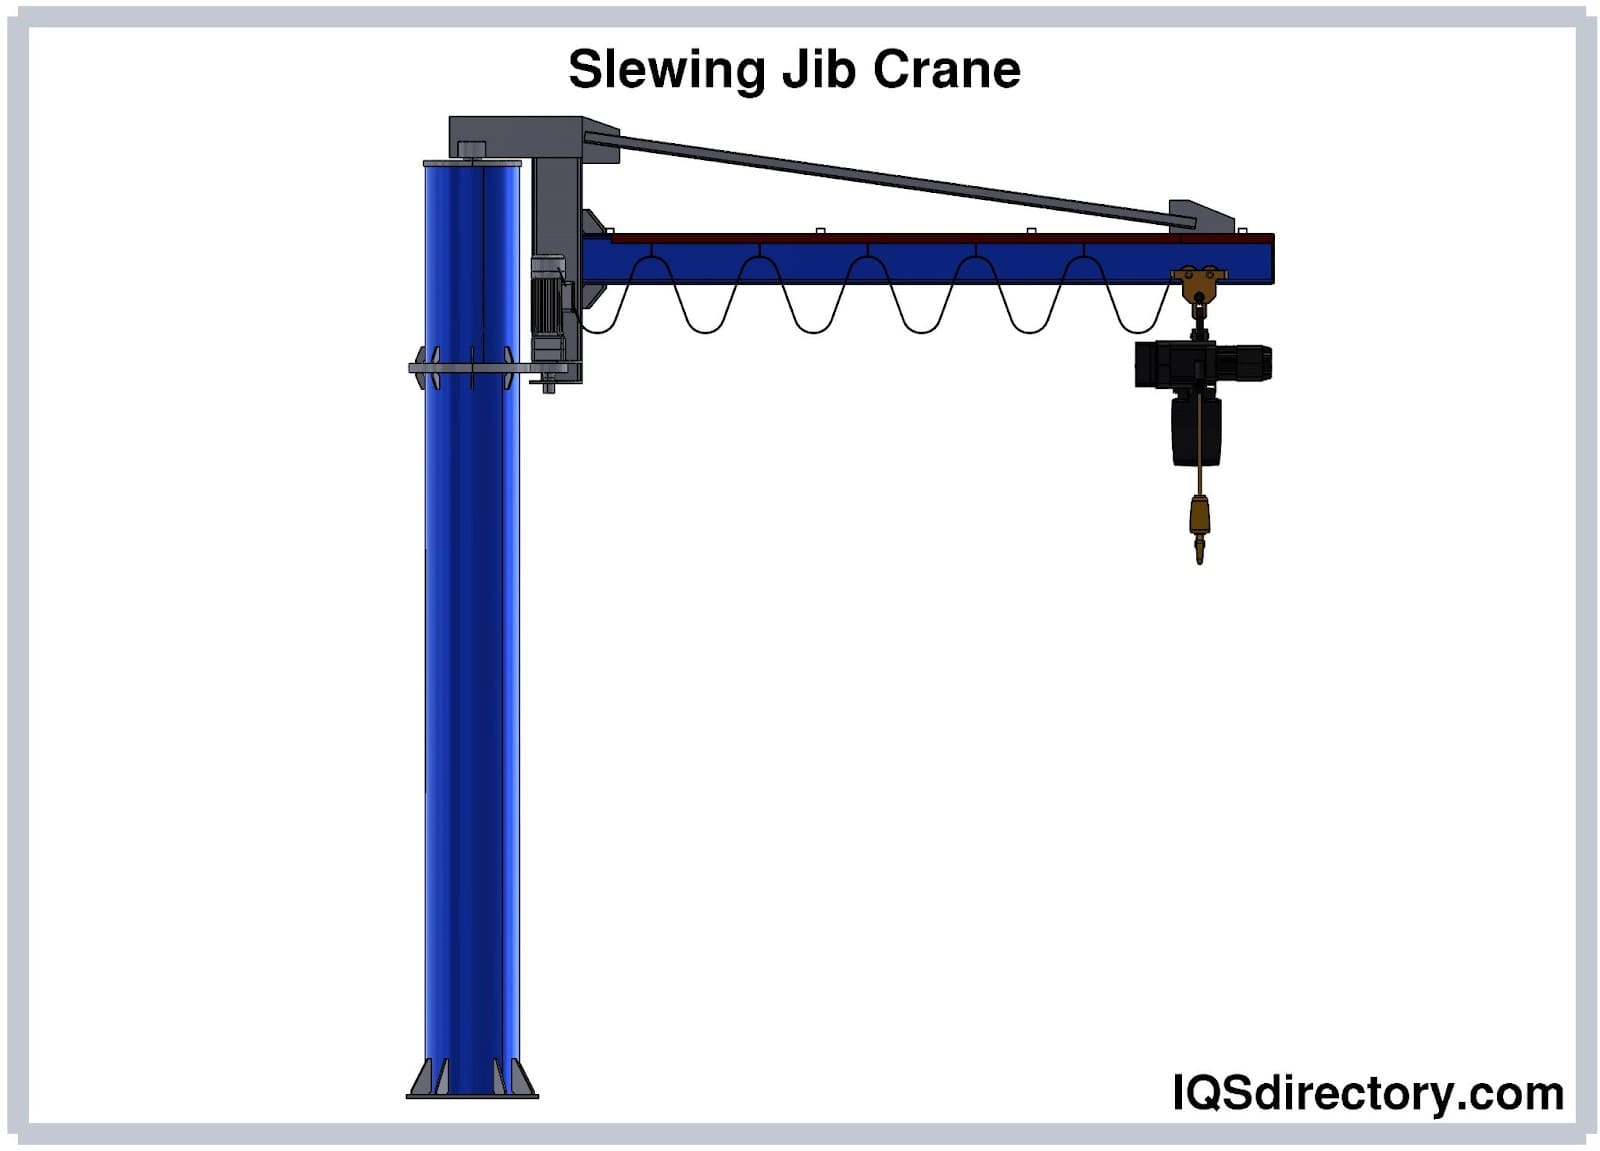 Slewing Jib Crane